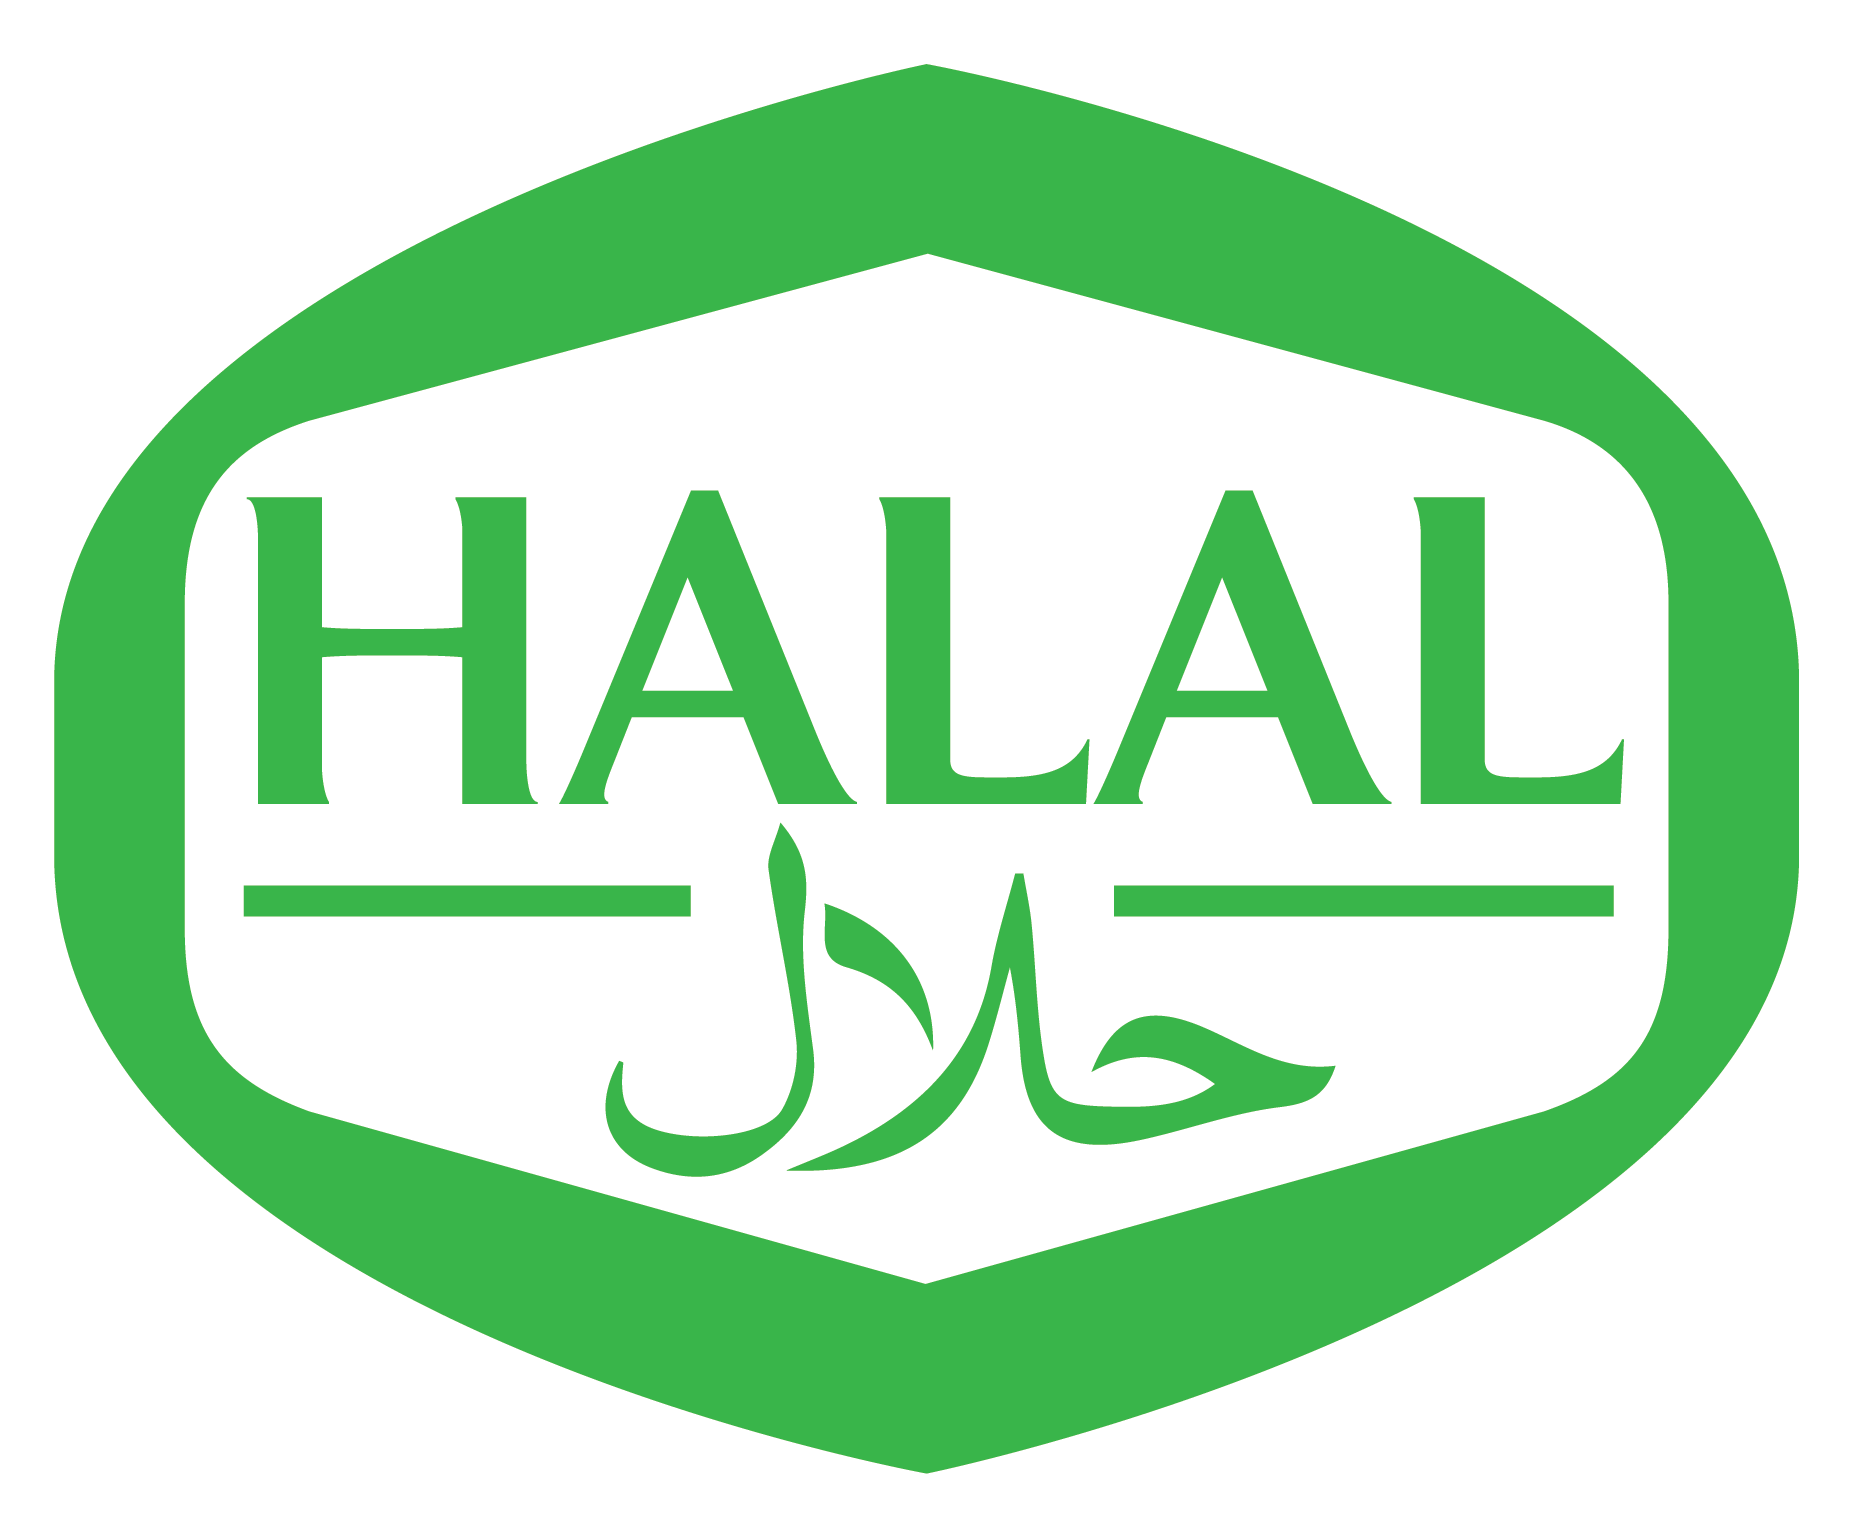 halal logo png